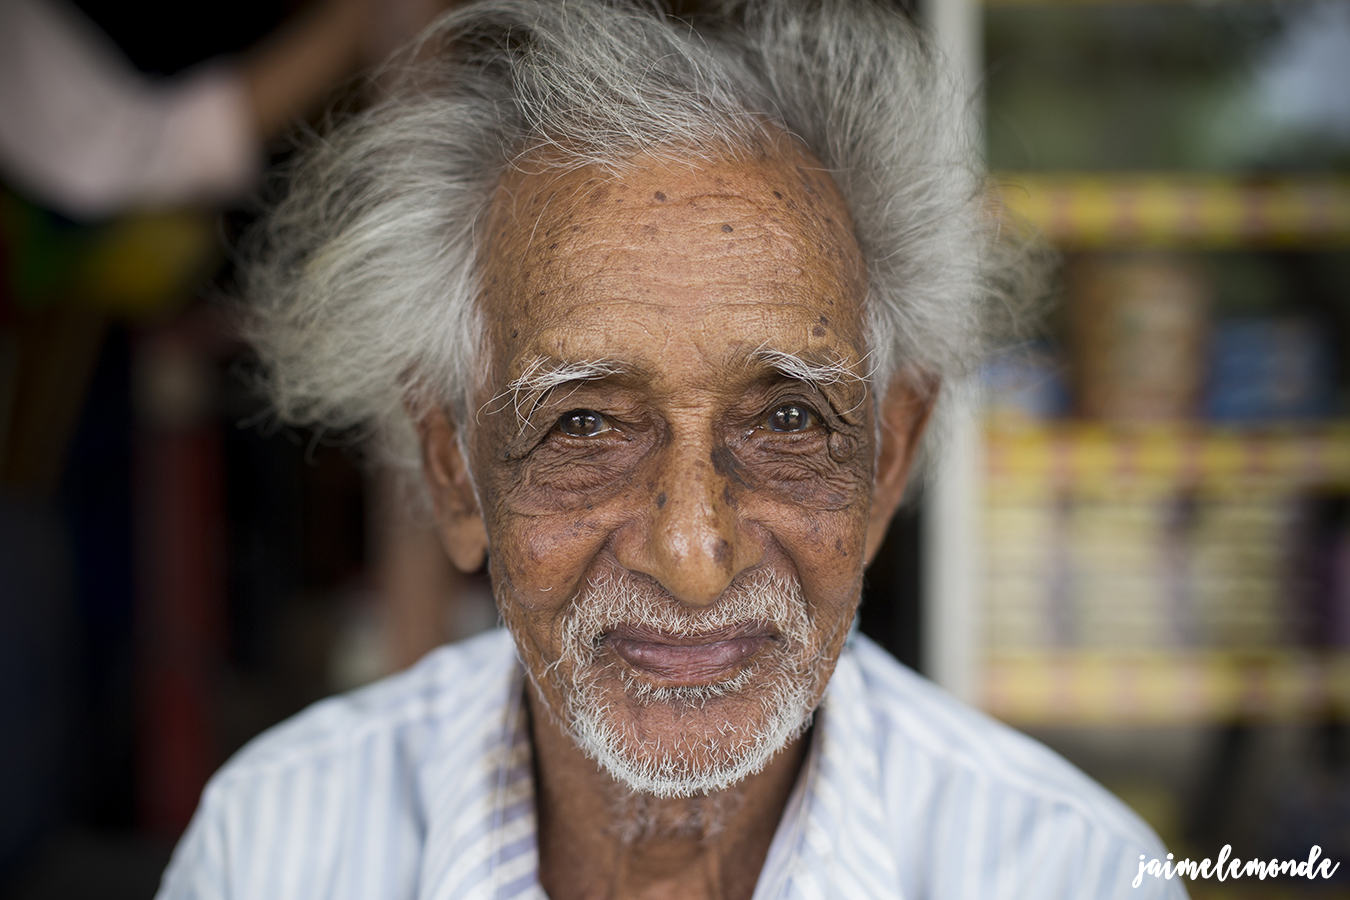 Portraits de voyage au Sri Lanka ©jaimelemonde (13)